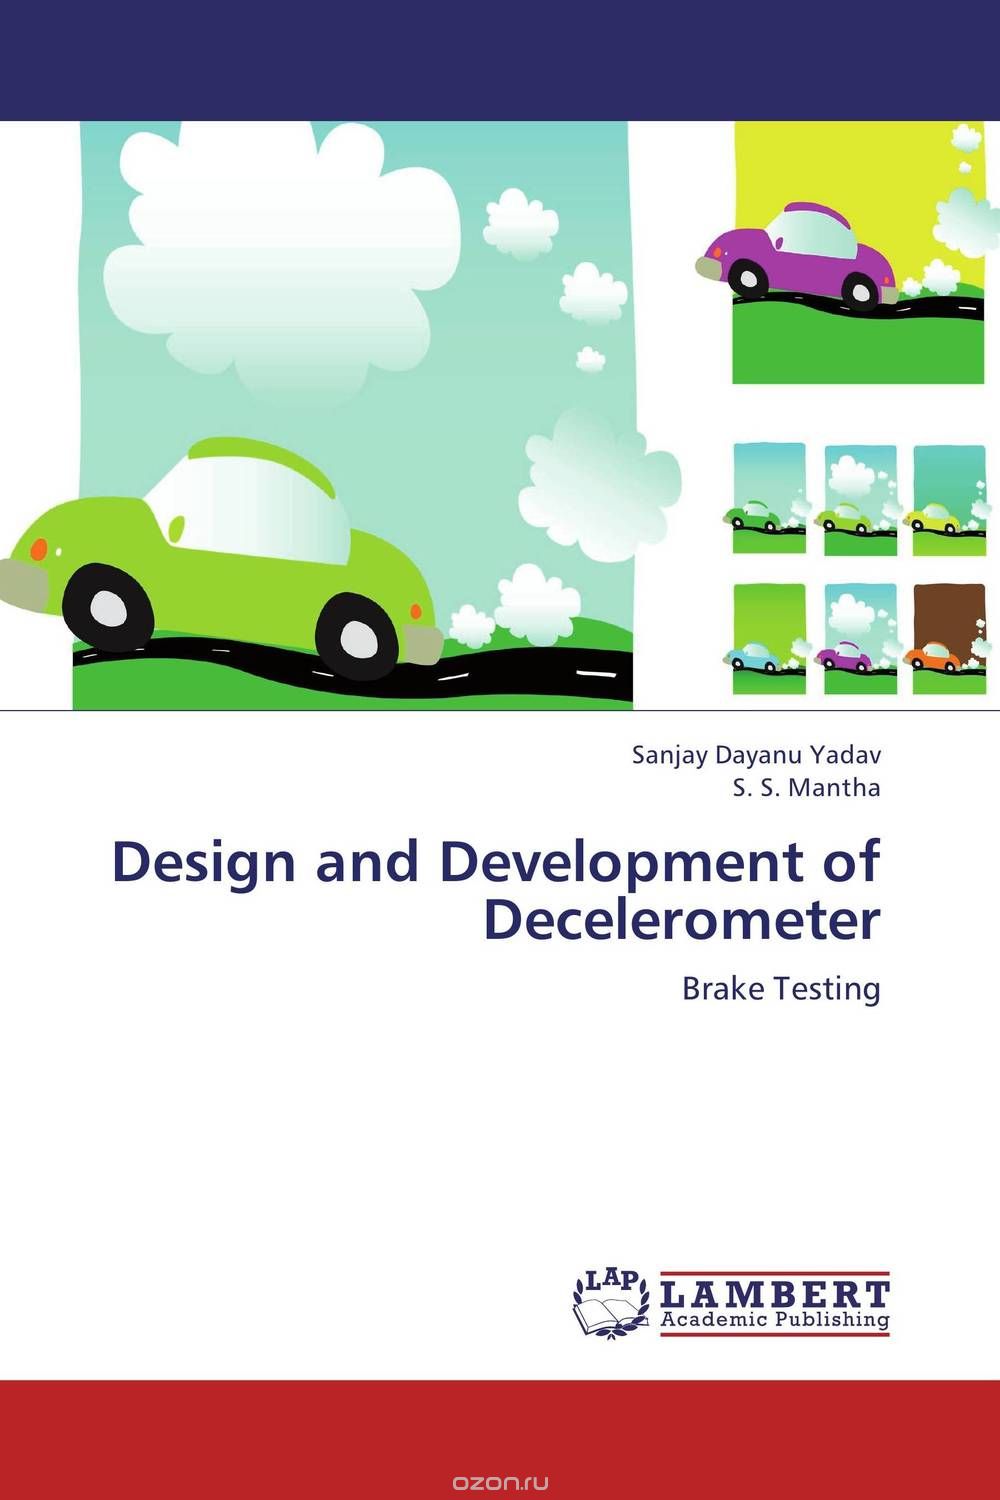 Design and Development of Decelerometer